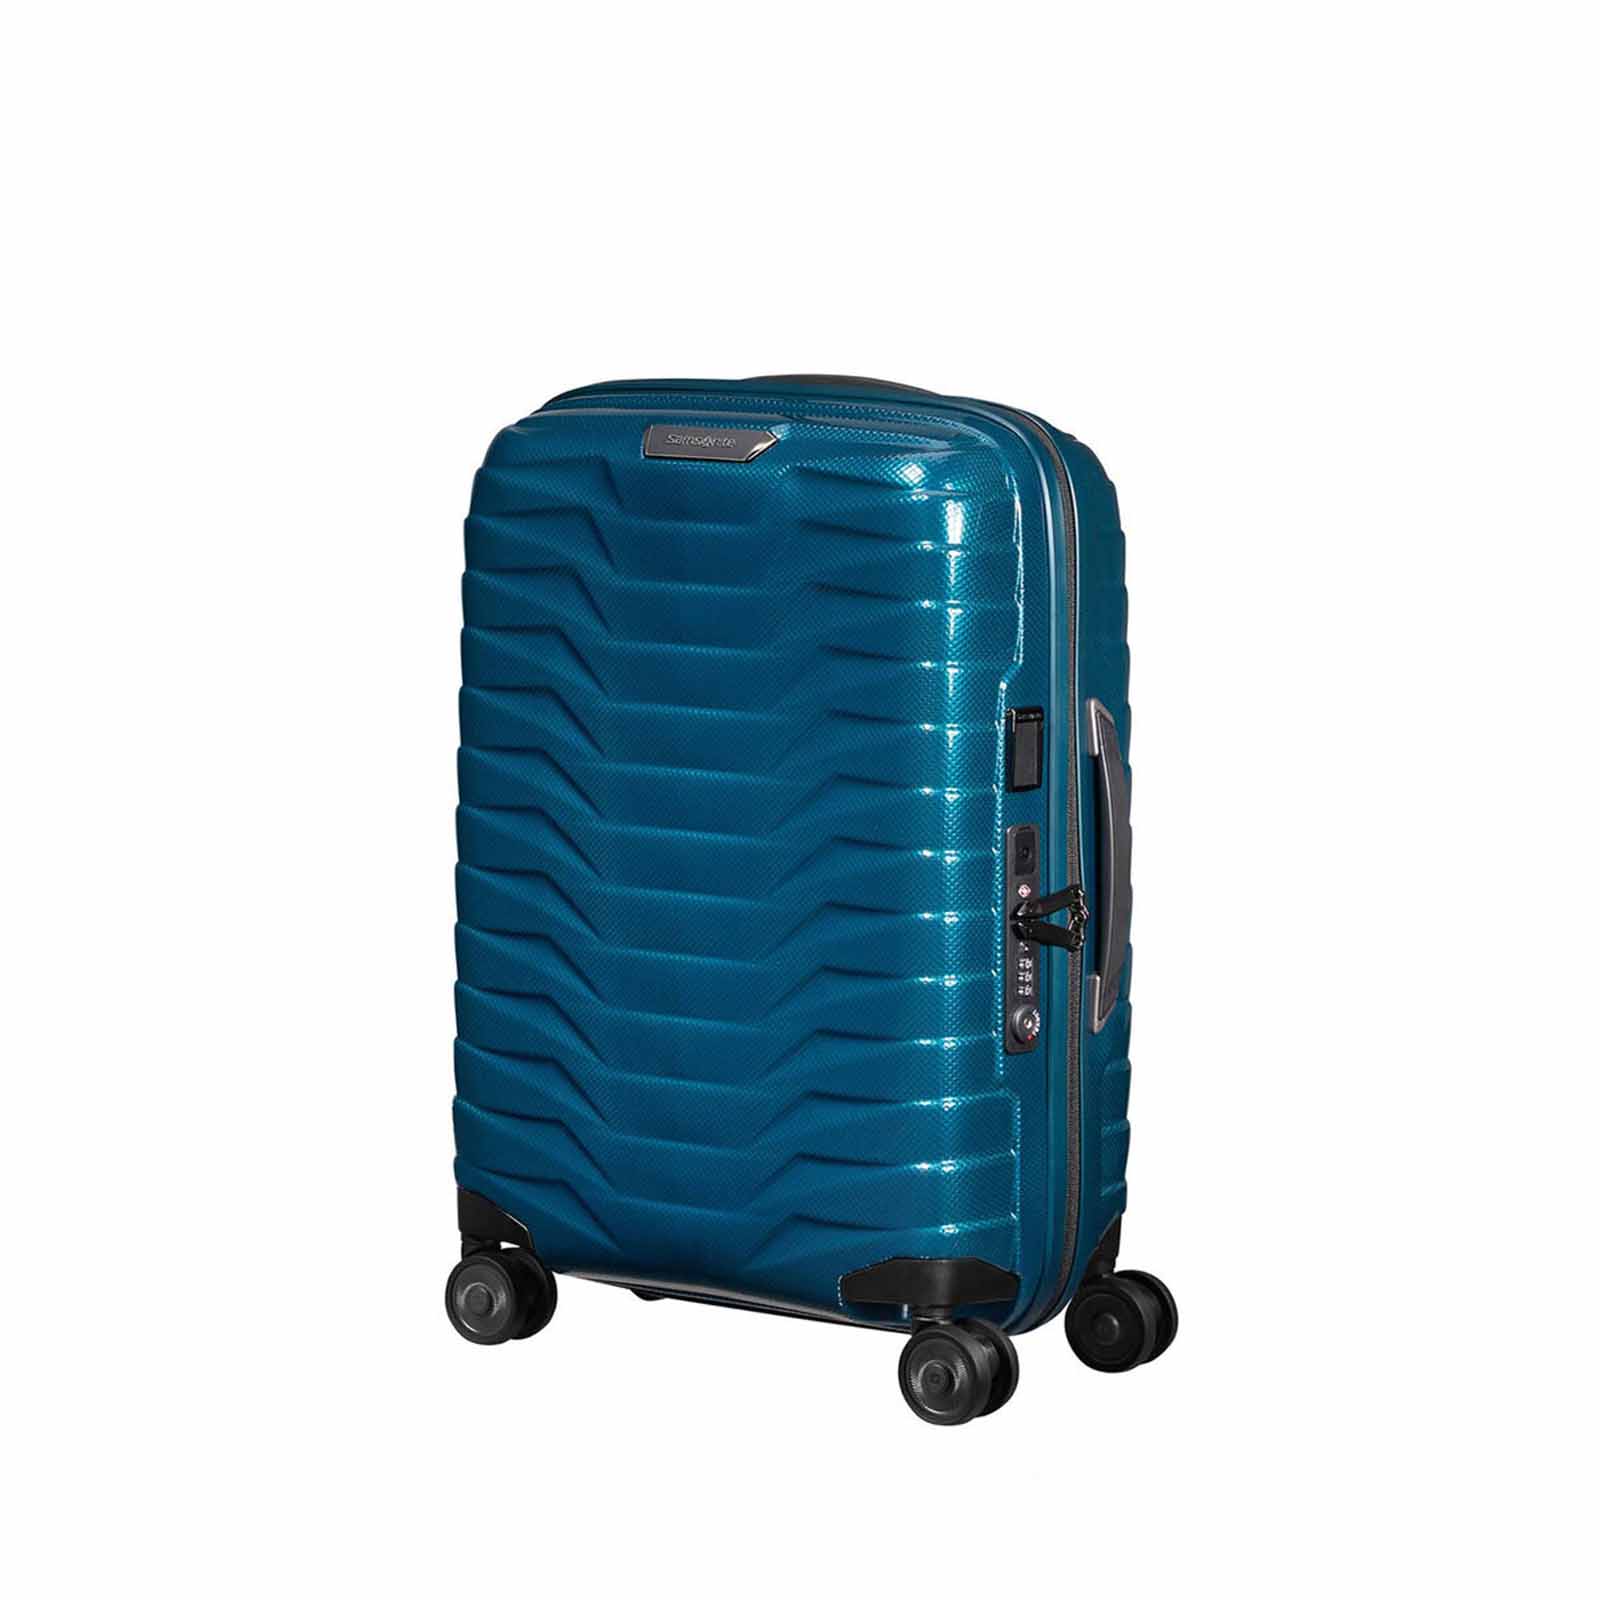 Samsonite-Proxis-55cm-Suitcase-Petrol-Blue-Front-Angle